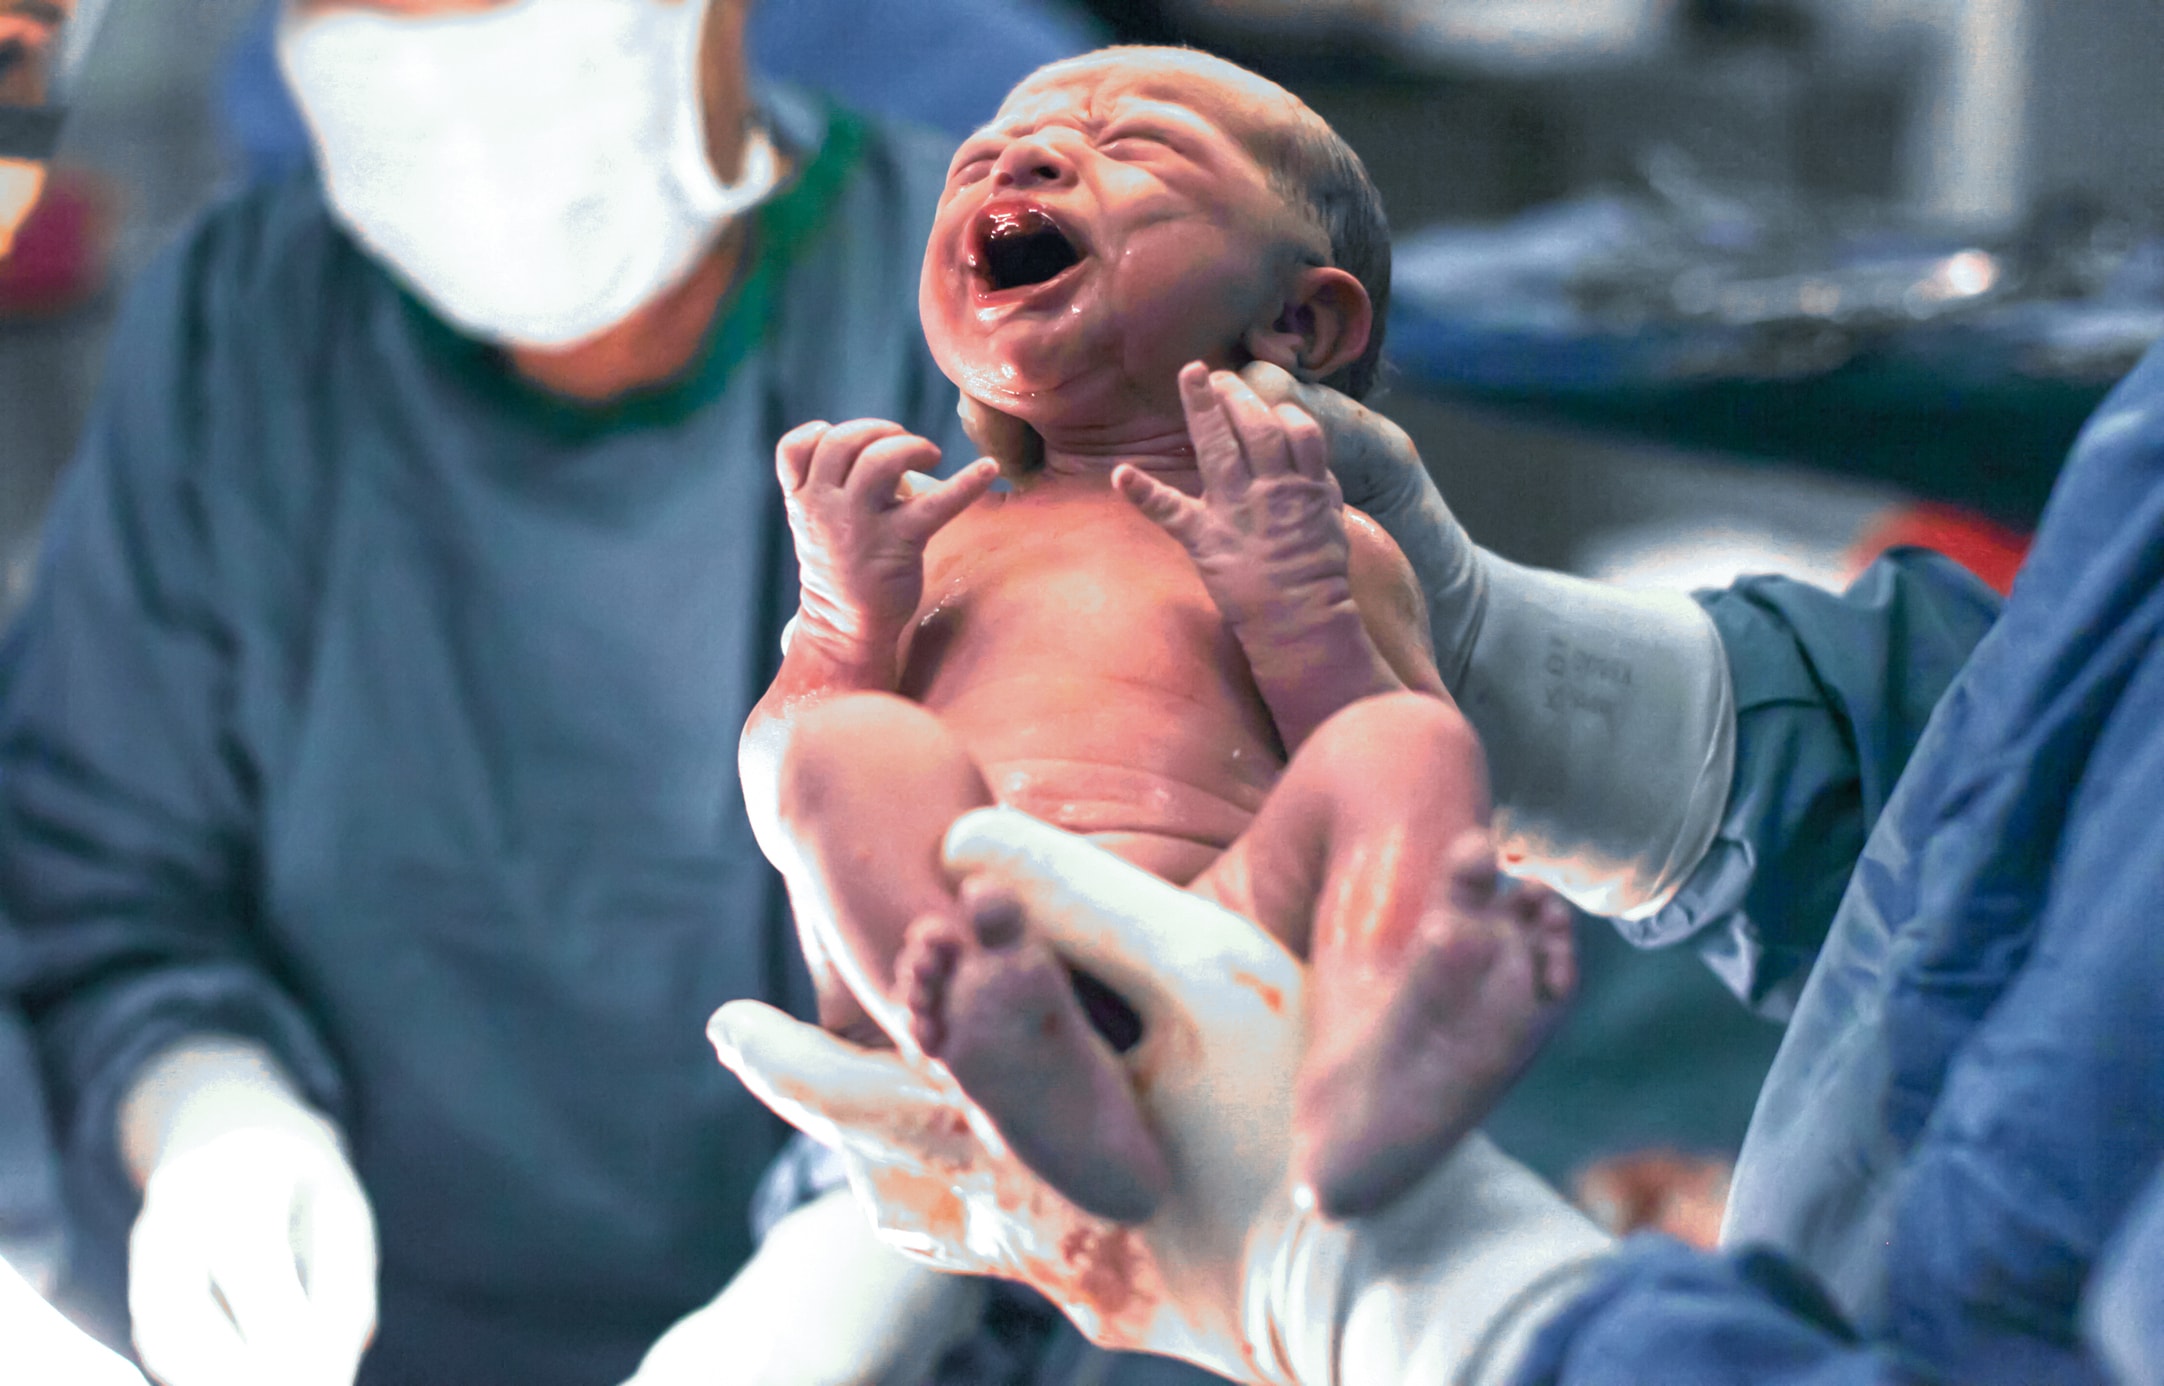 12 baby birth videos that prepare for the big day - Care.com